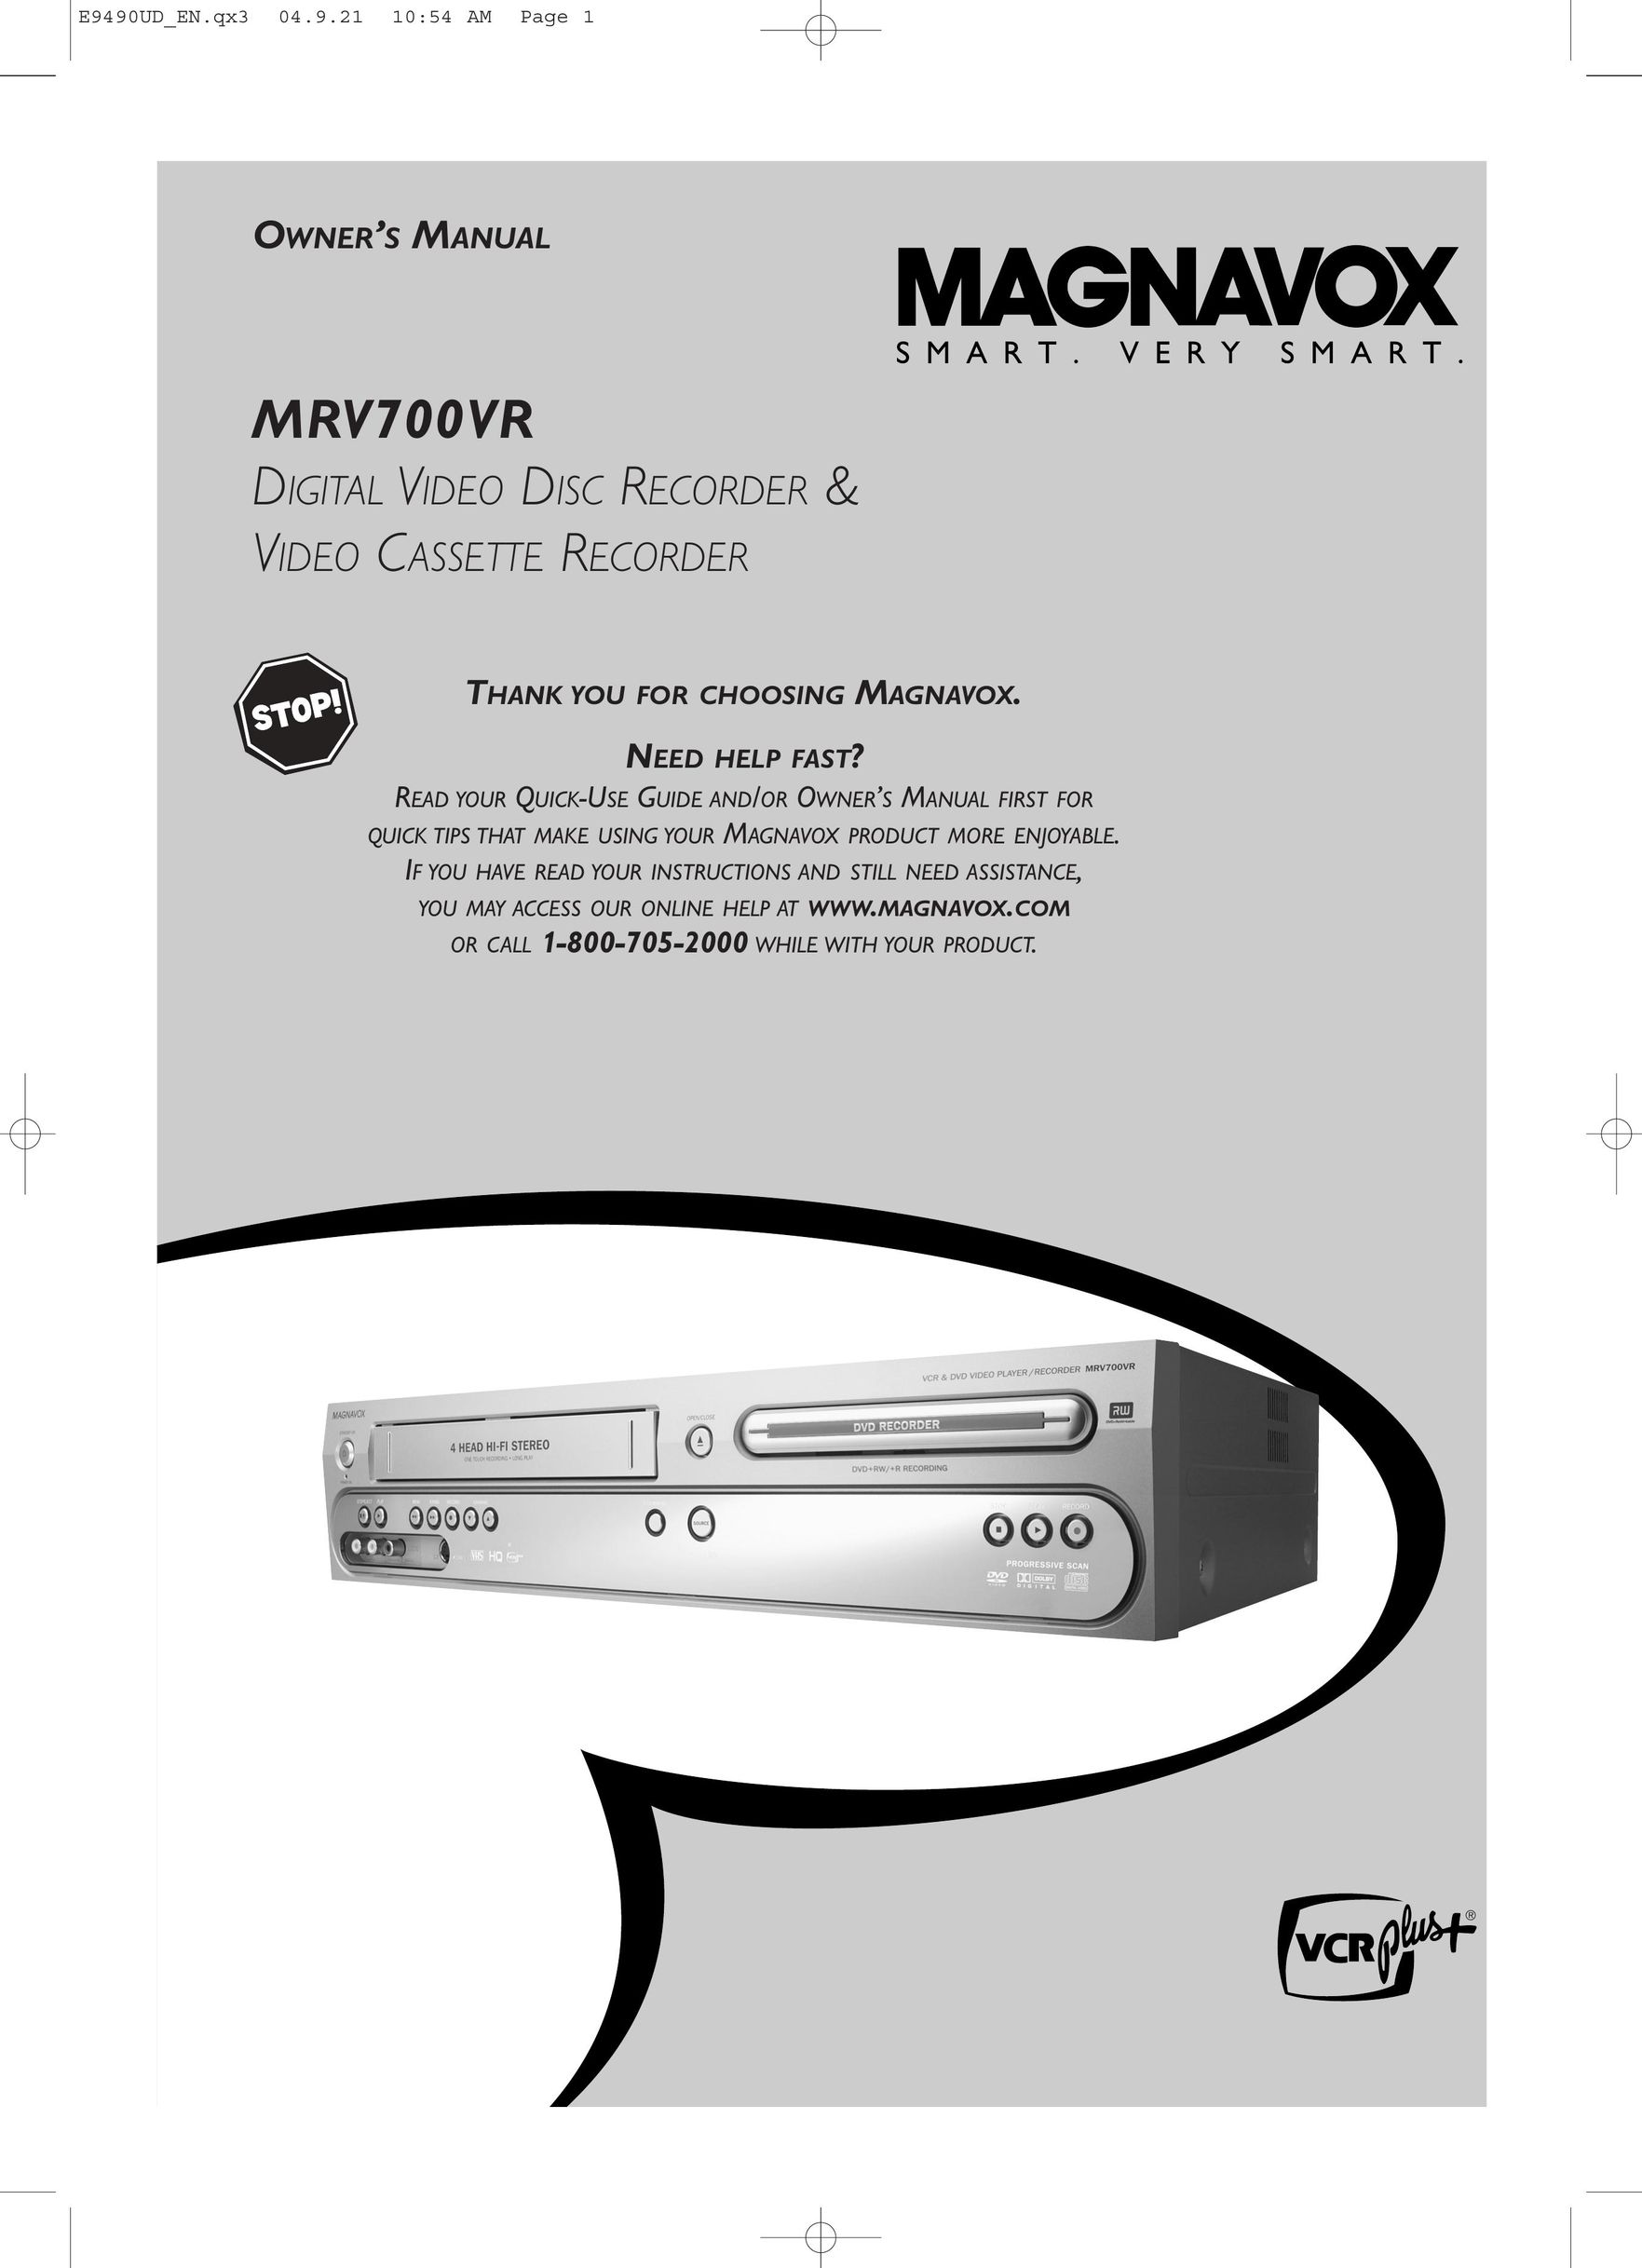 Magnavox MRV700VR VCR User Manual